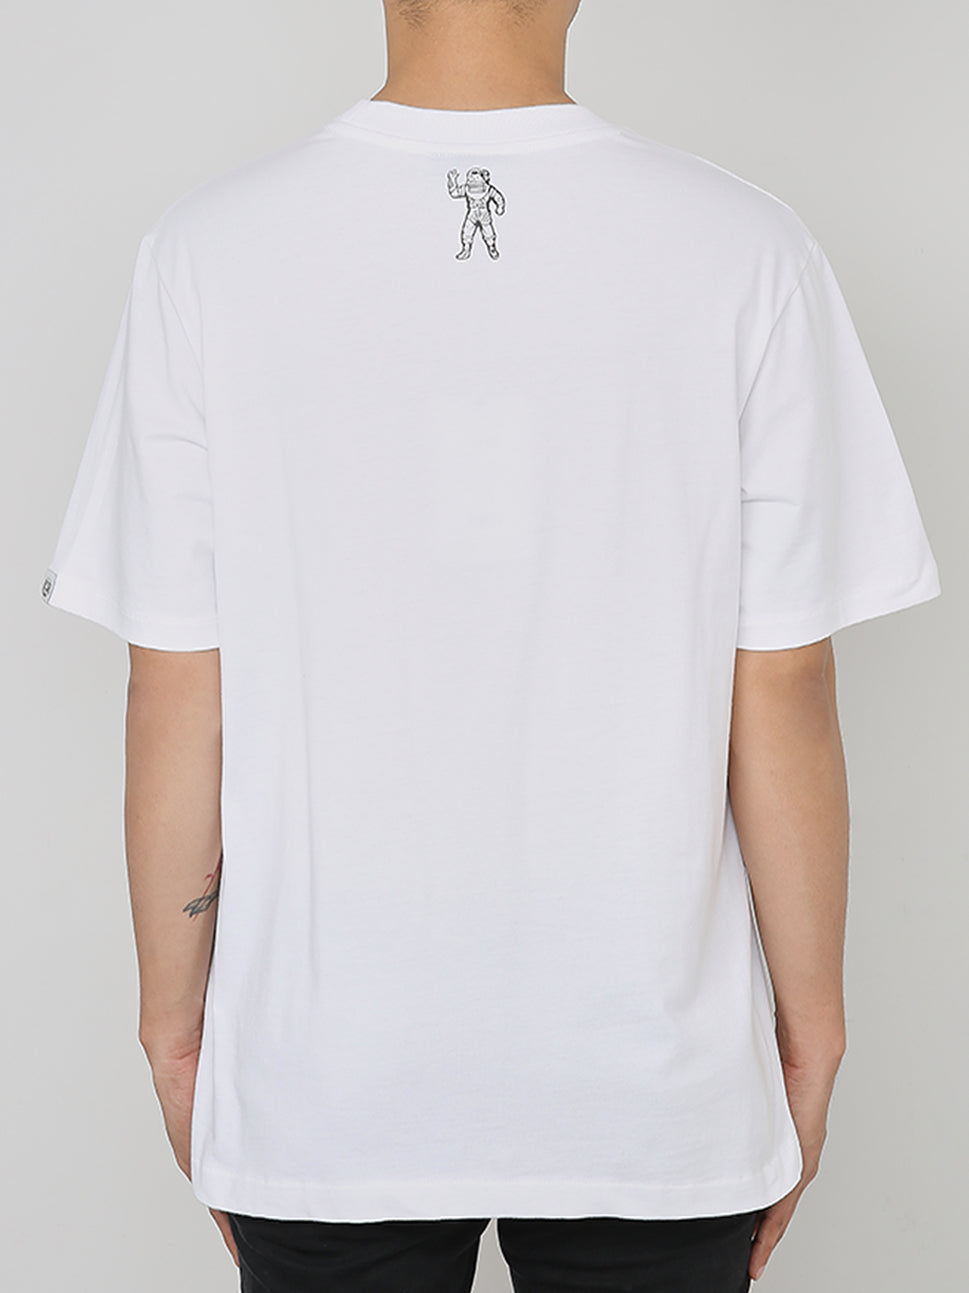 Billionaire Boys Club Signage T Shirt White